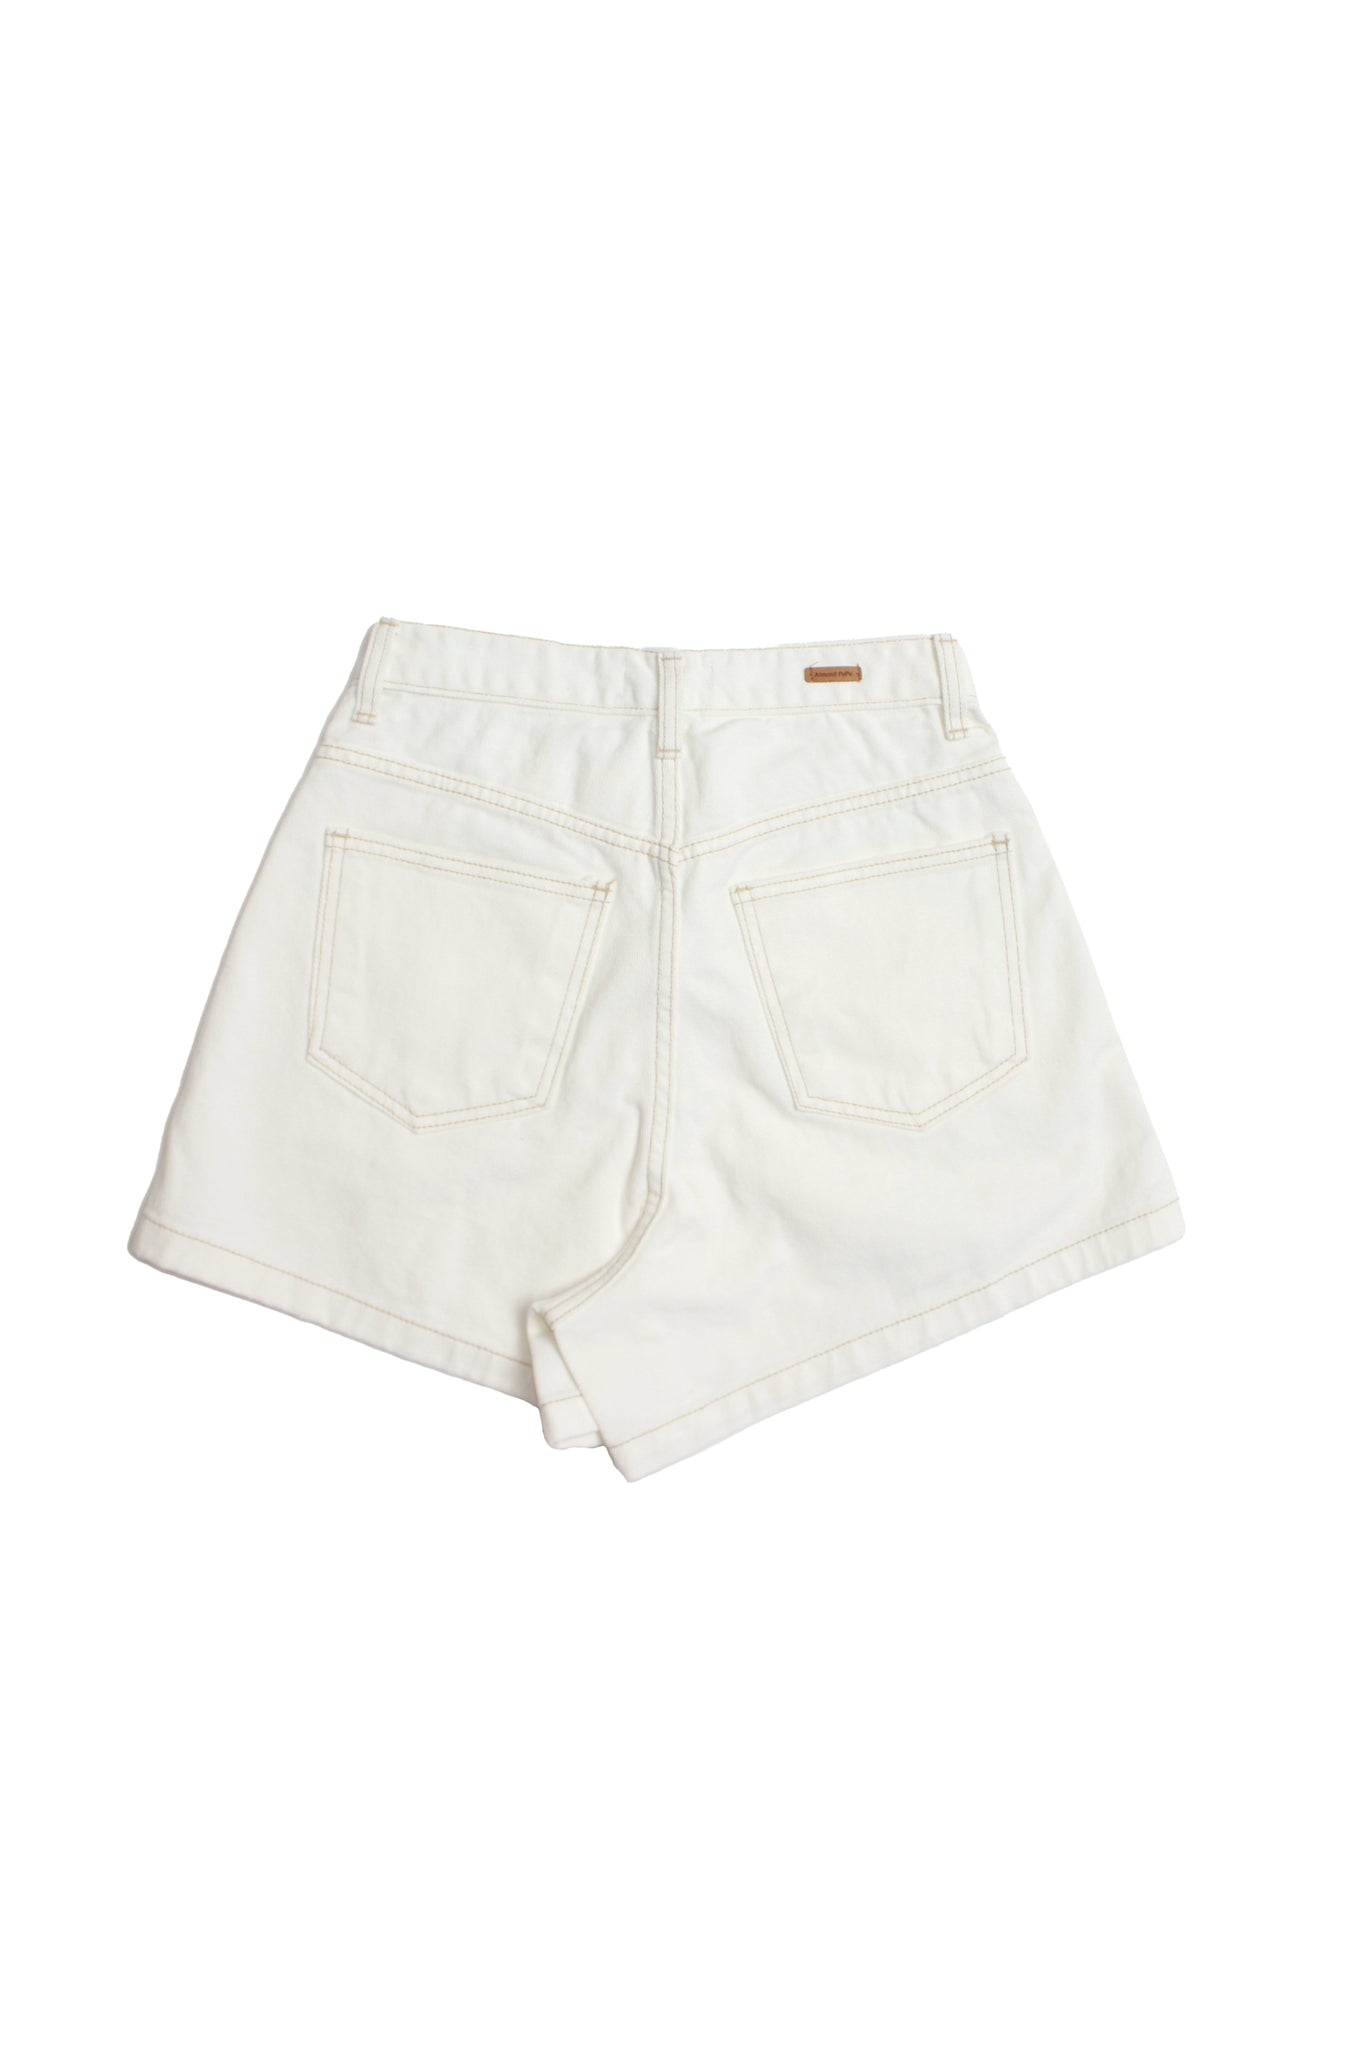 Roe Denim Shorts in White